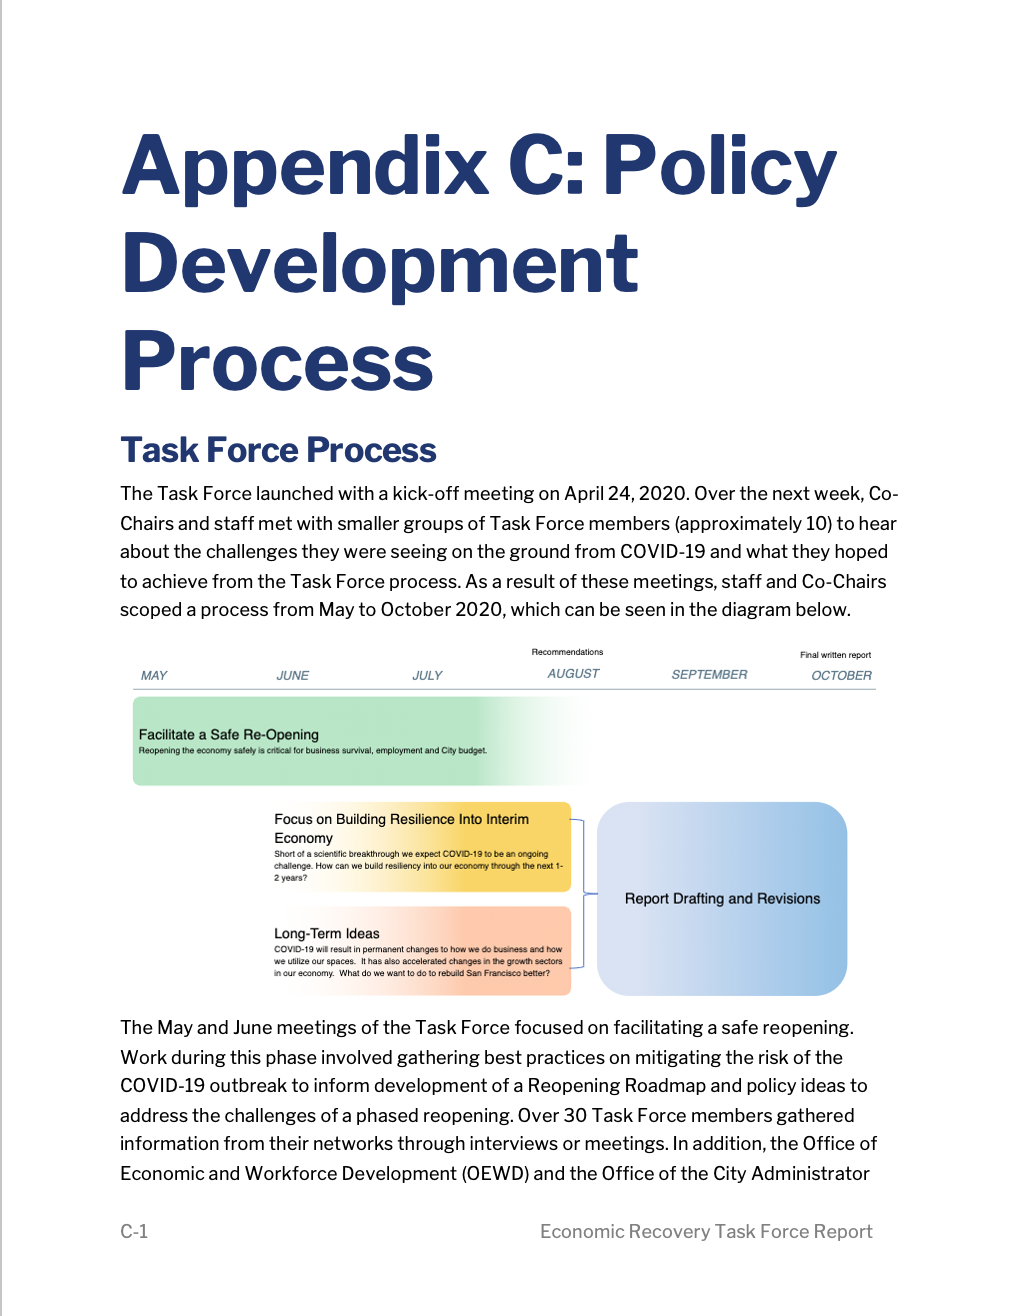 ERTF Appendix C - Policy Development Process